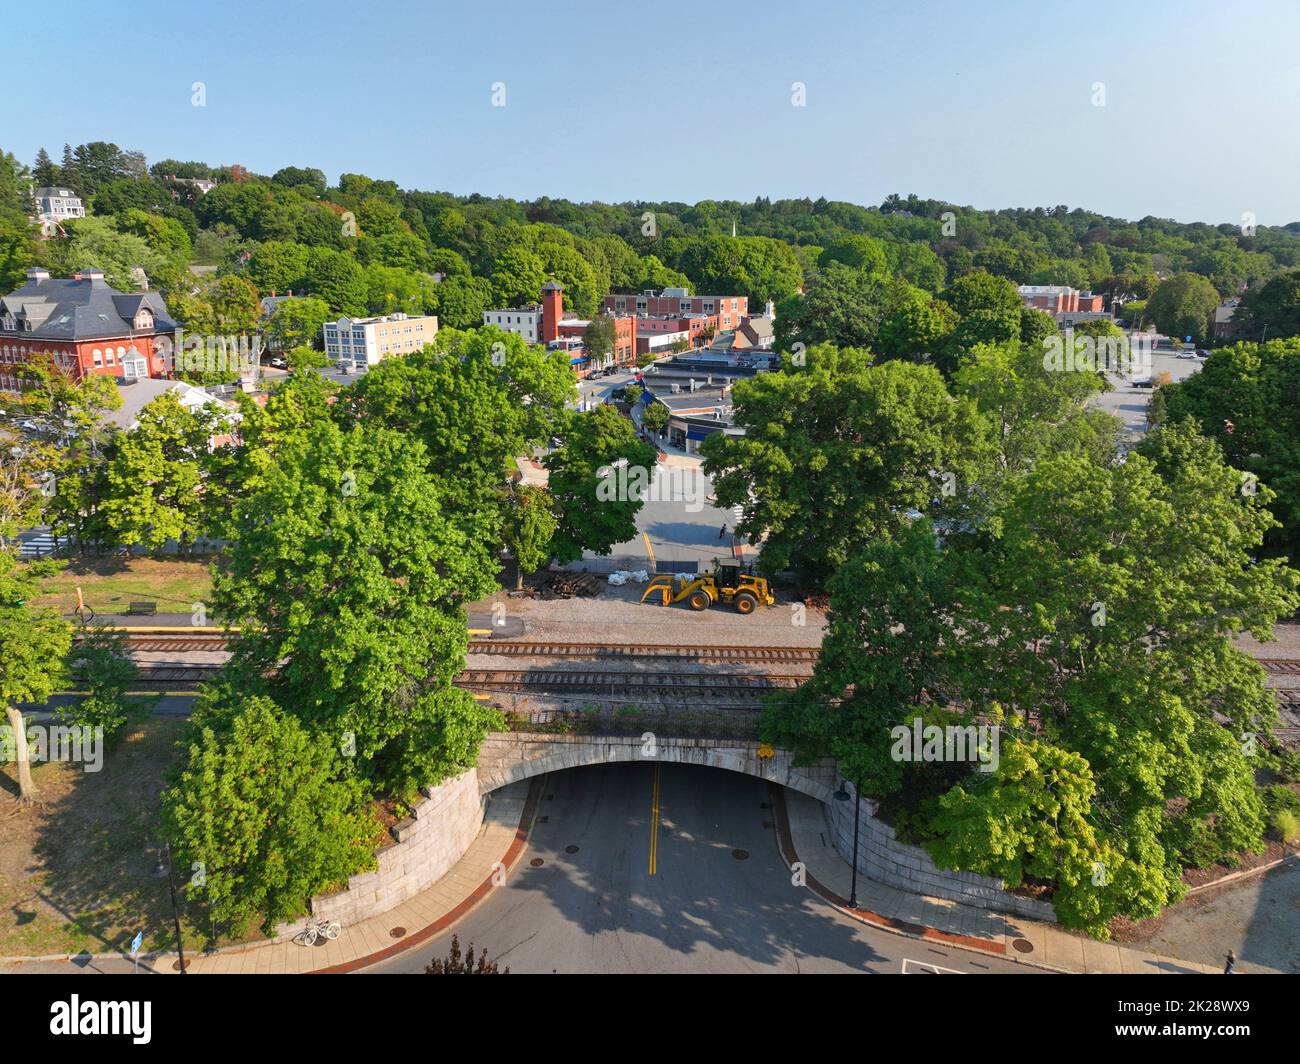 Belmont railroad bridge across Concord Avenue aerial view in historic town center of Belmont, Massachusetts MA, USA. Stock Photo